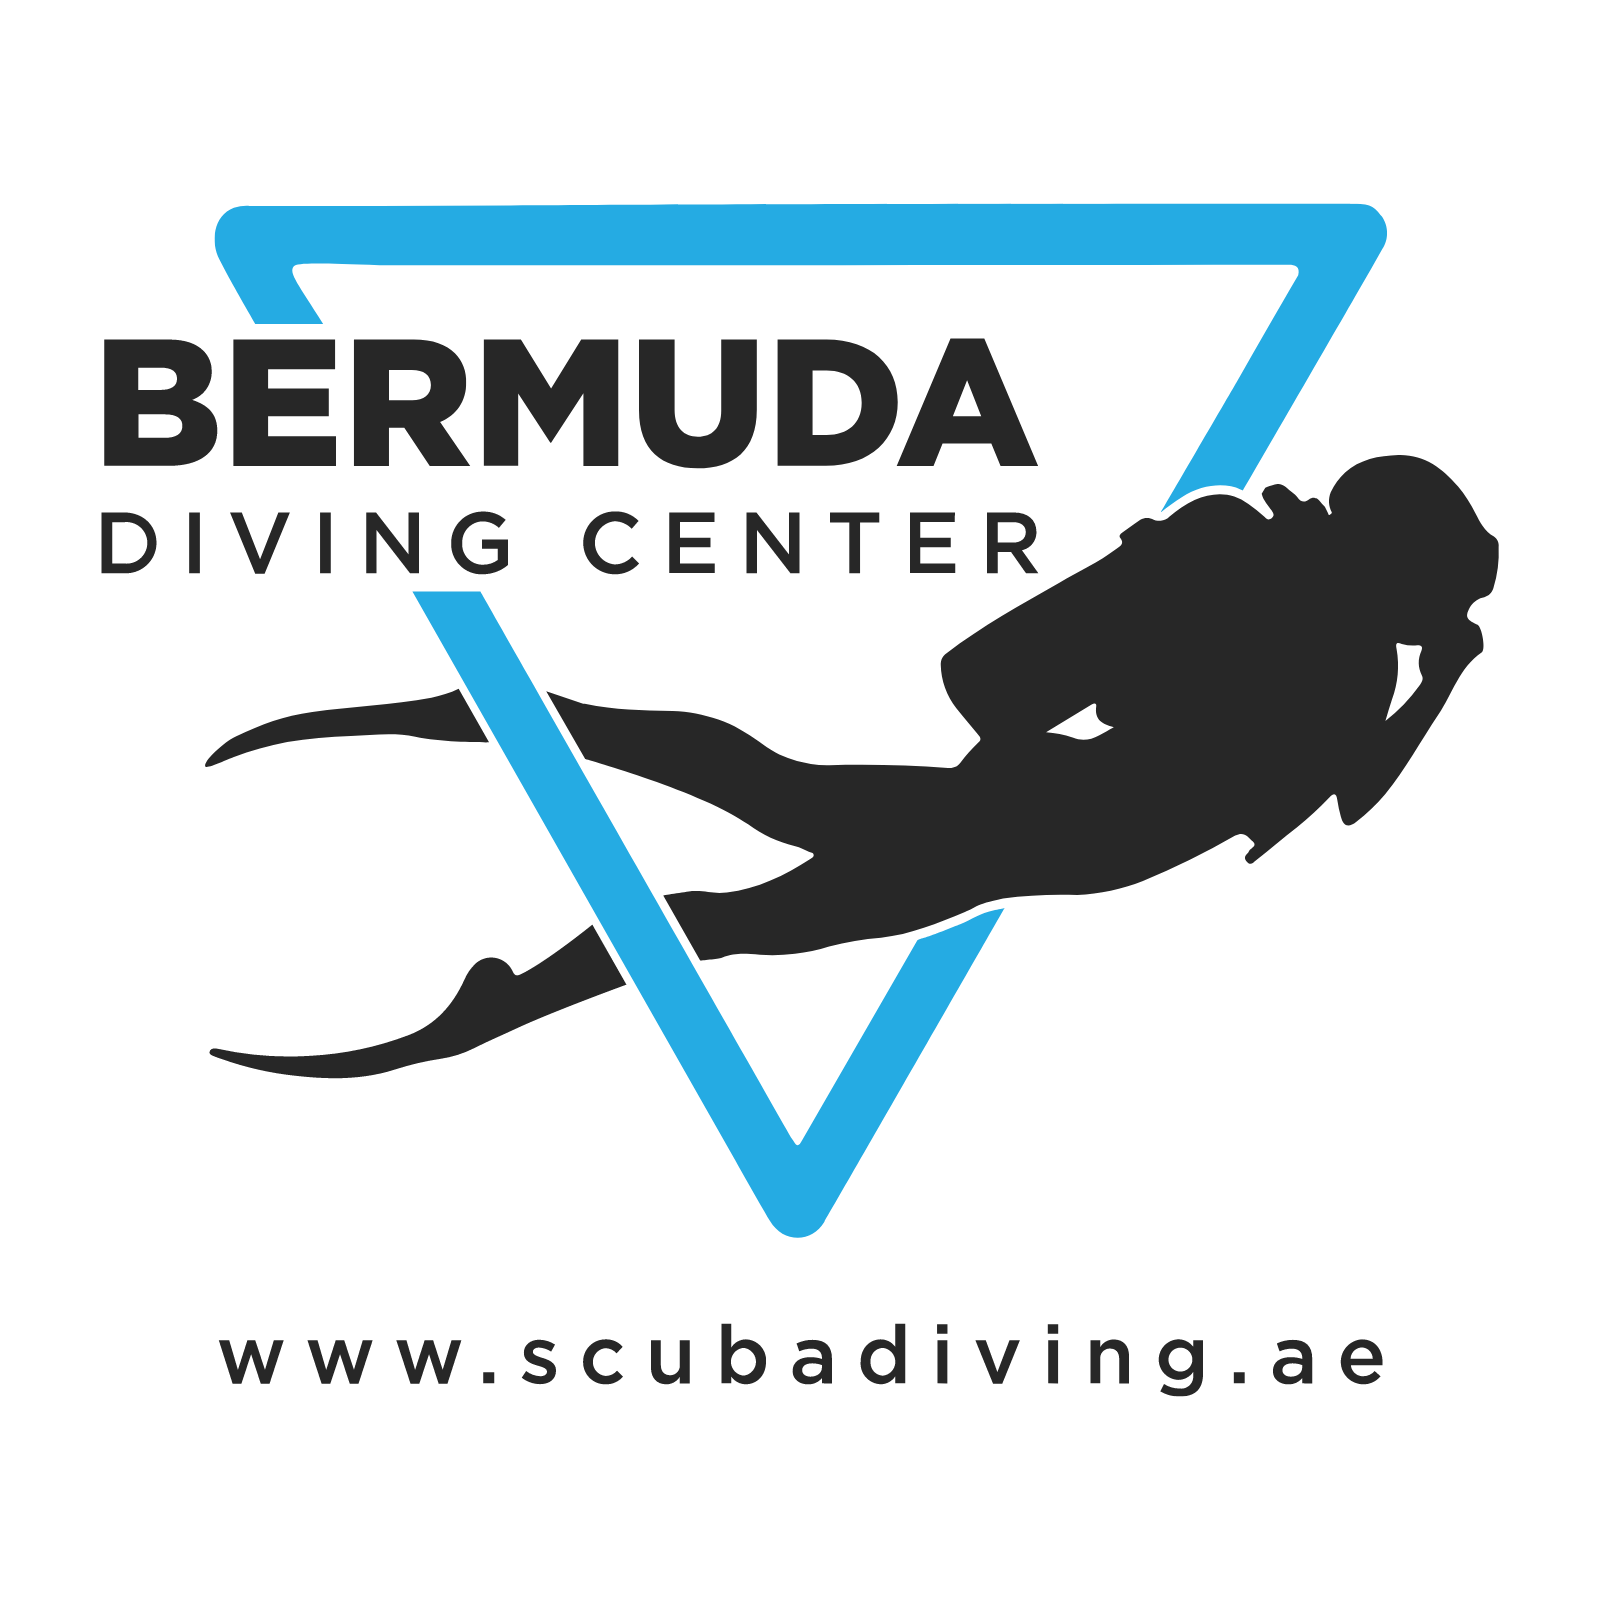 Bermuda Diving Center Brand Logo